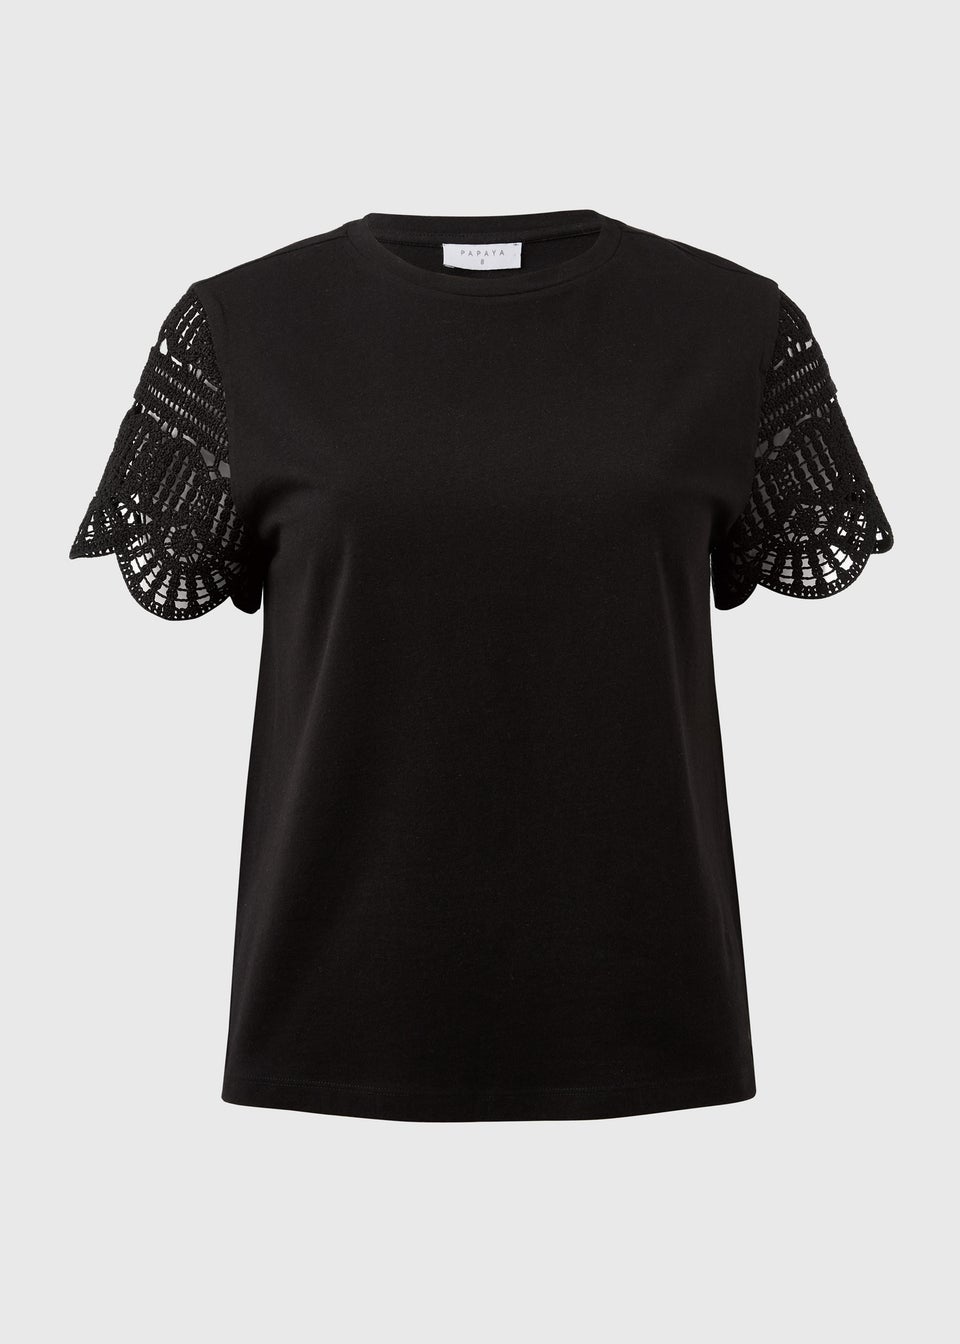 Black Crochet Sleeve T-Shirt